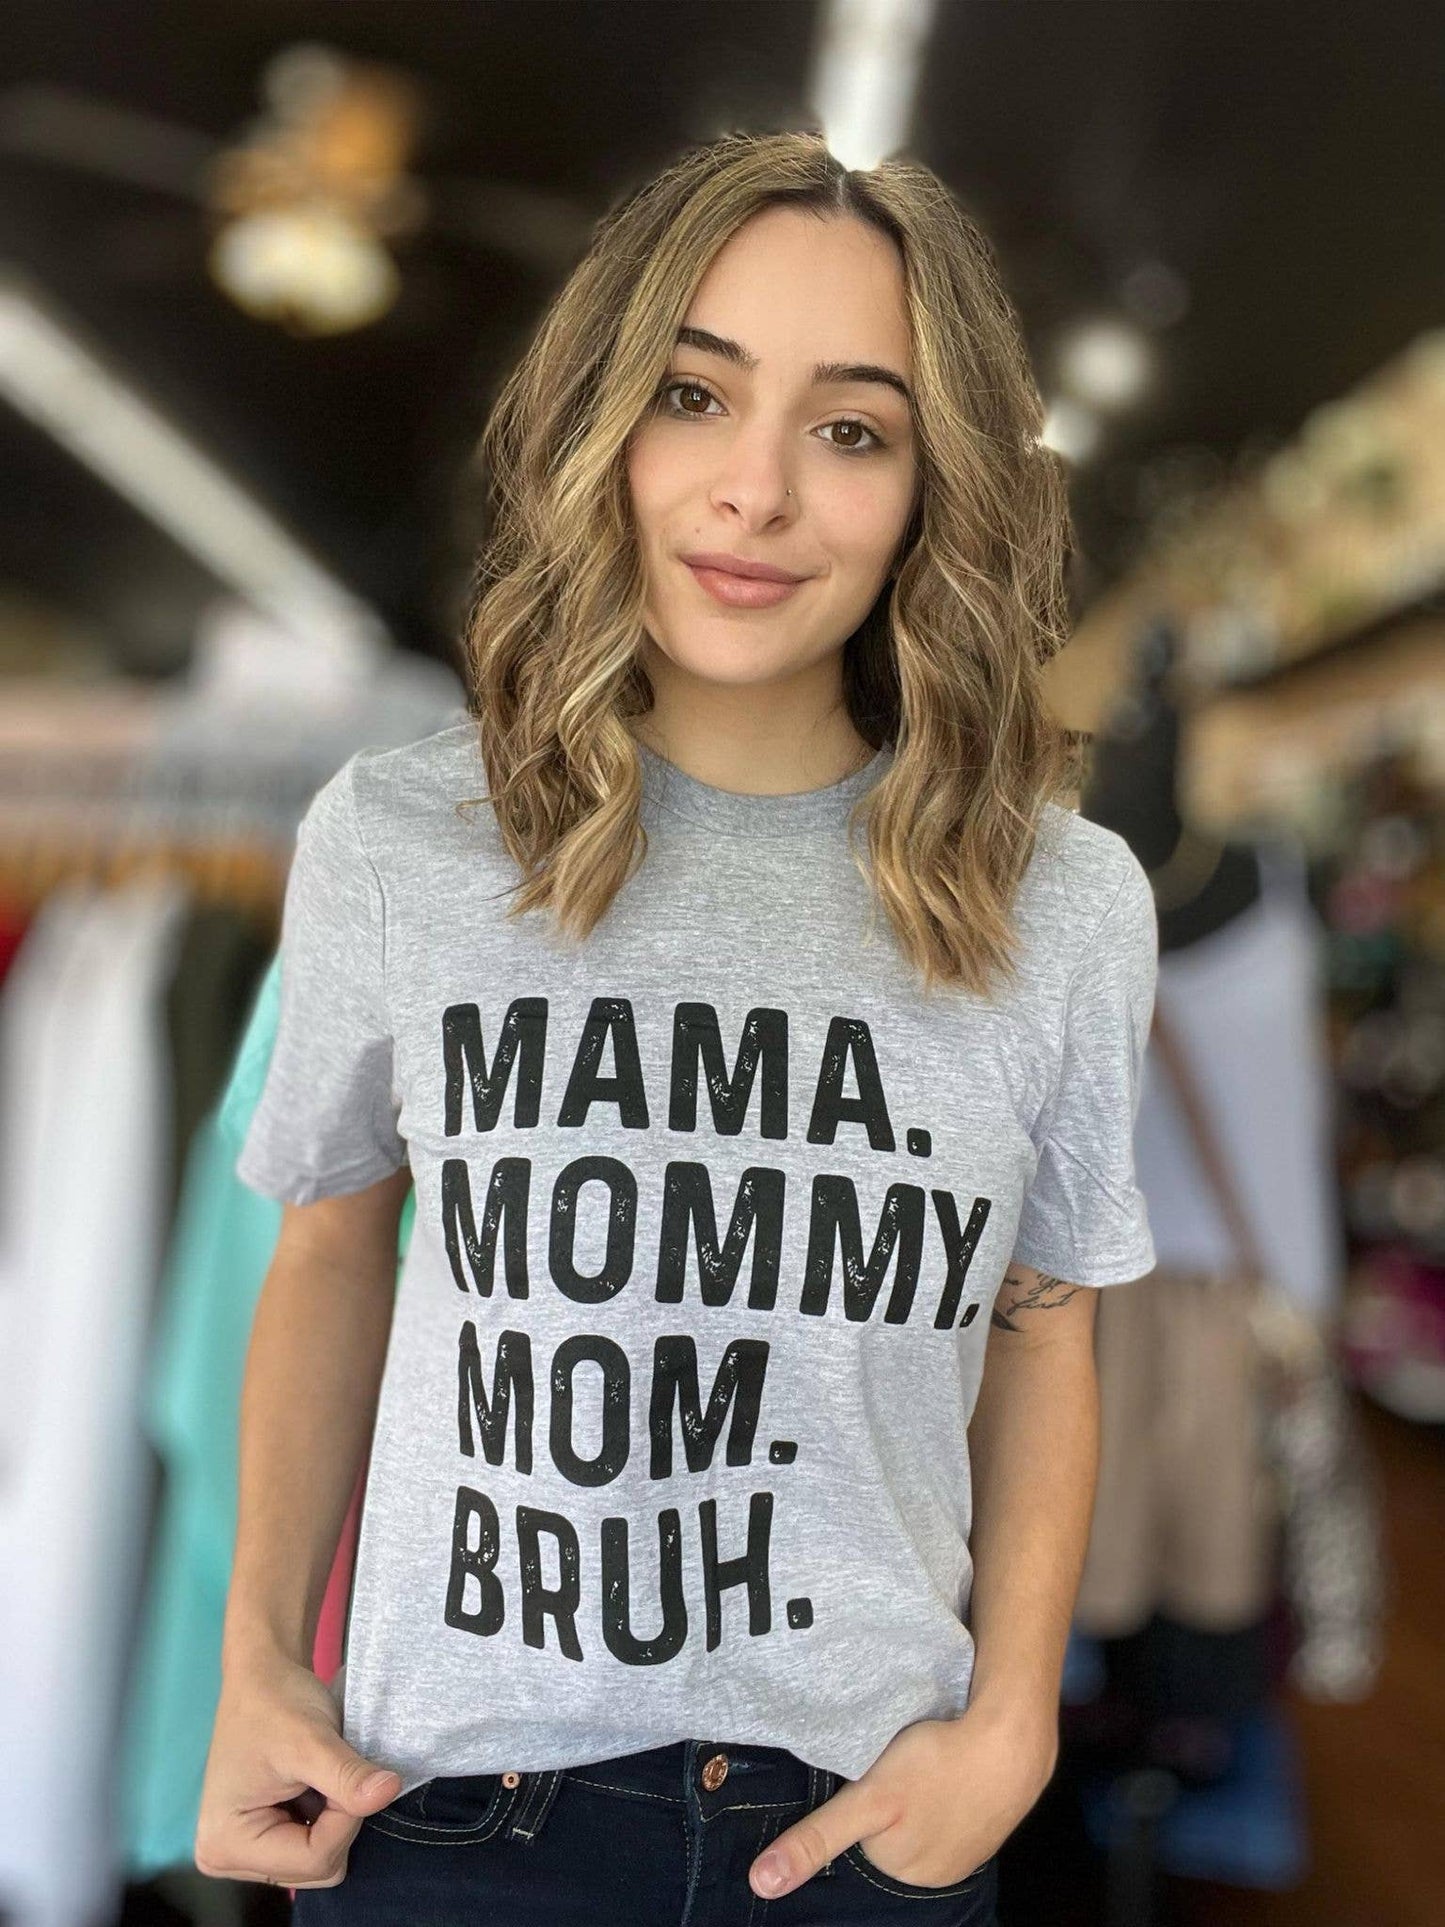 Mom. Mommy. Mom. Bruh.